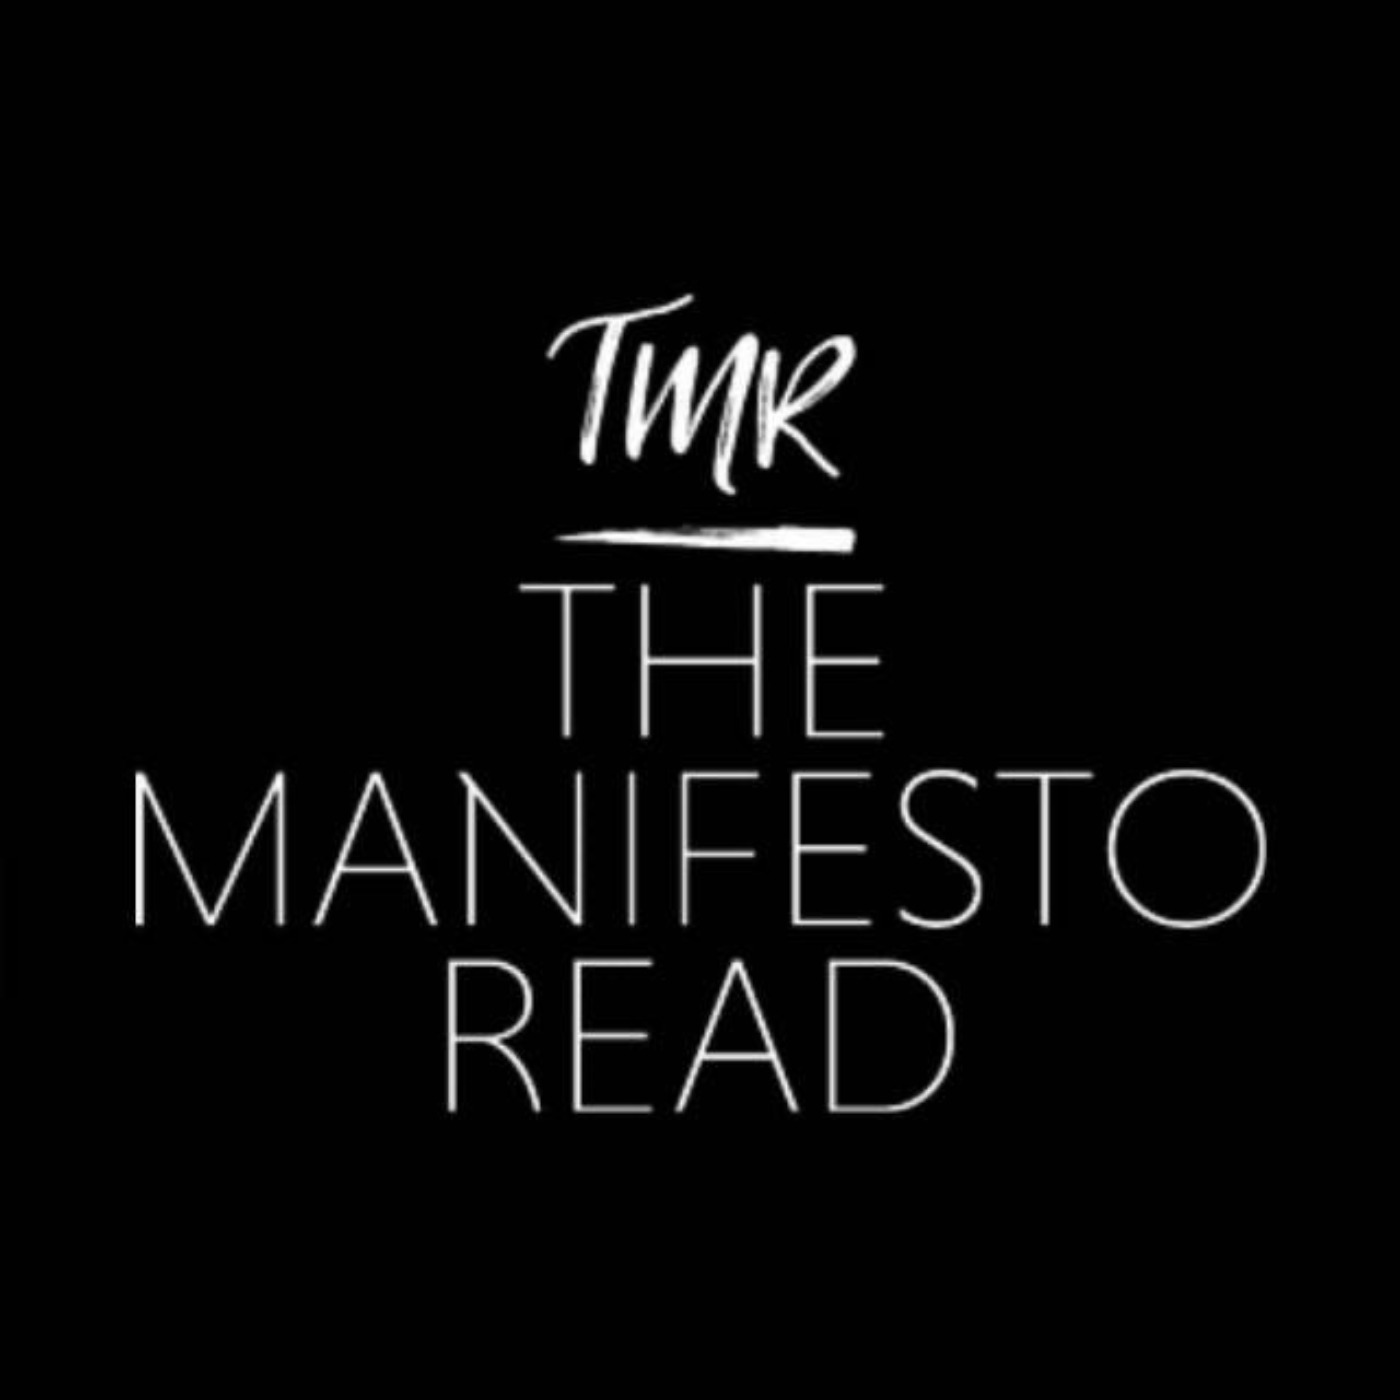 The Manifesto Read